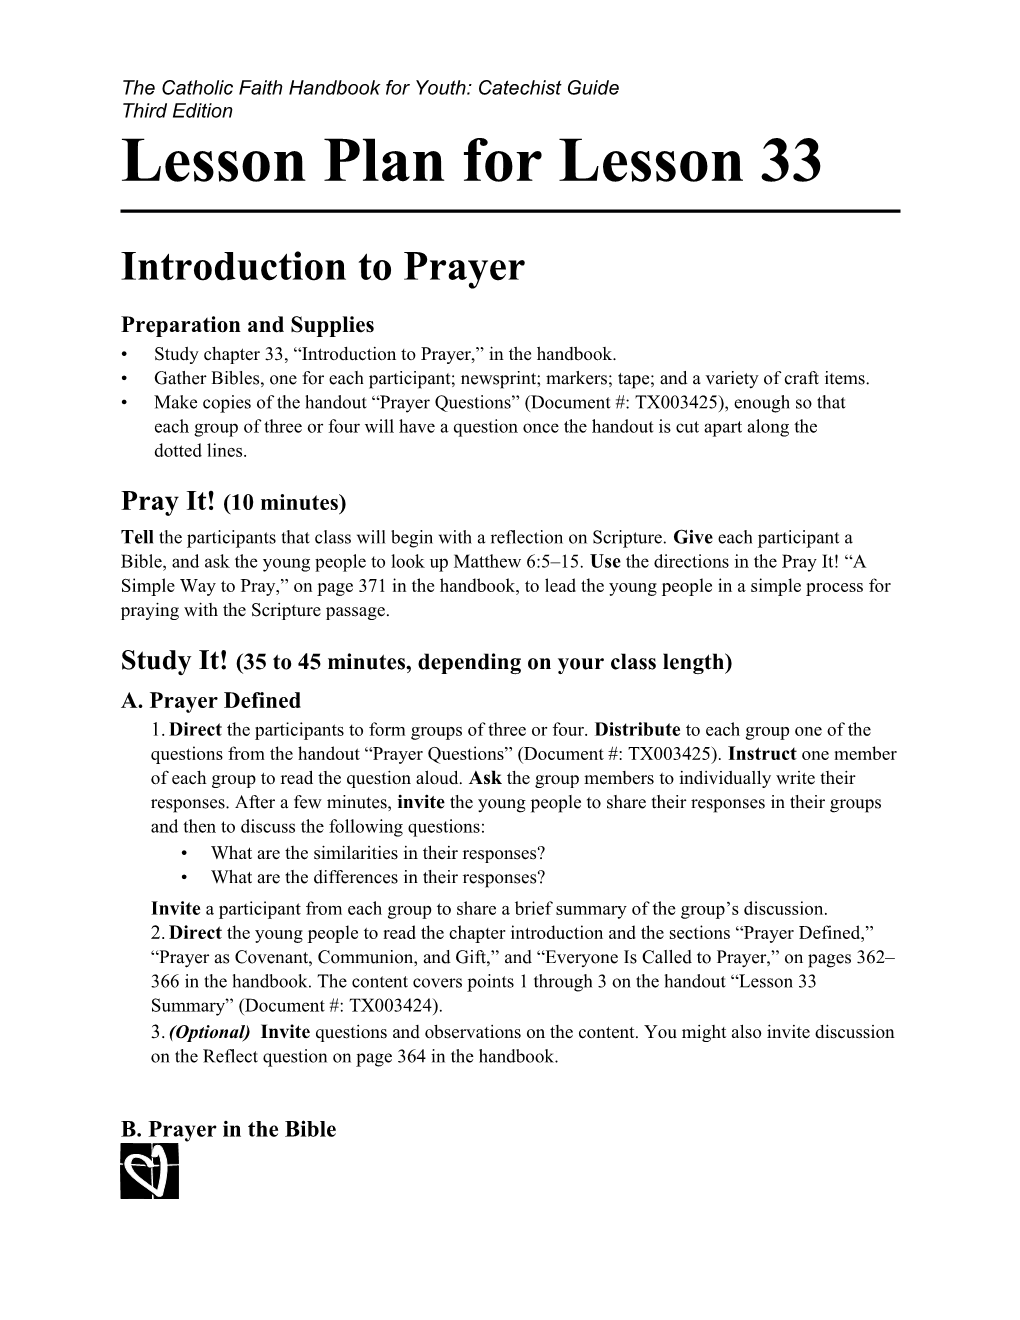 Lesson Plan for Lesson 33